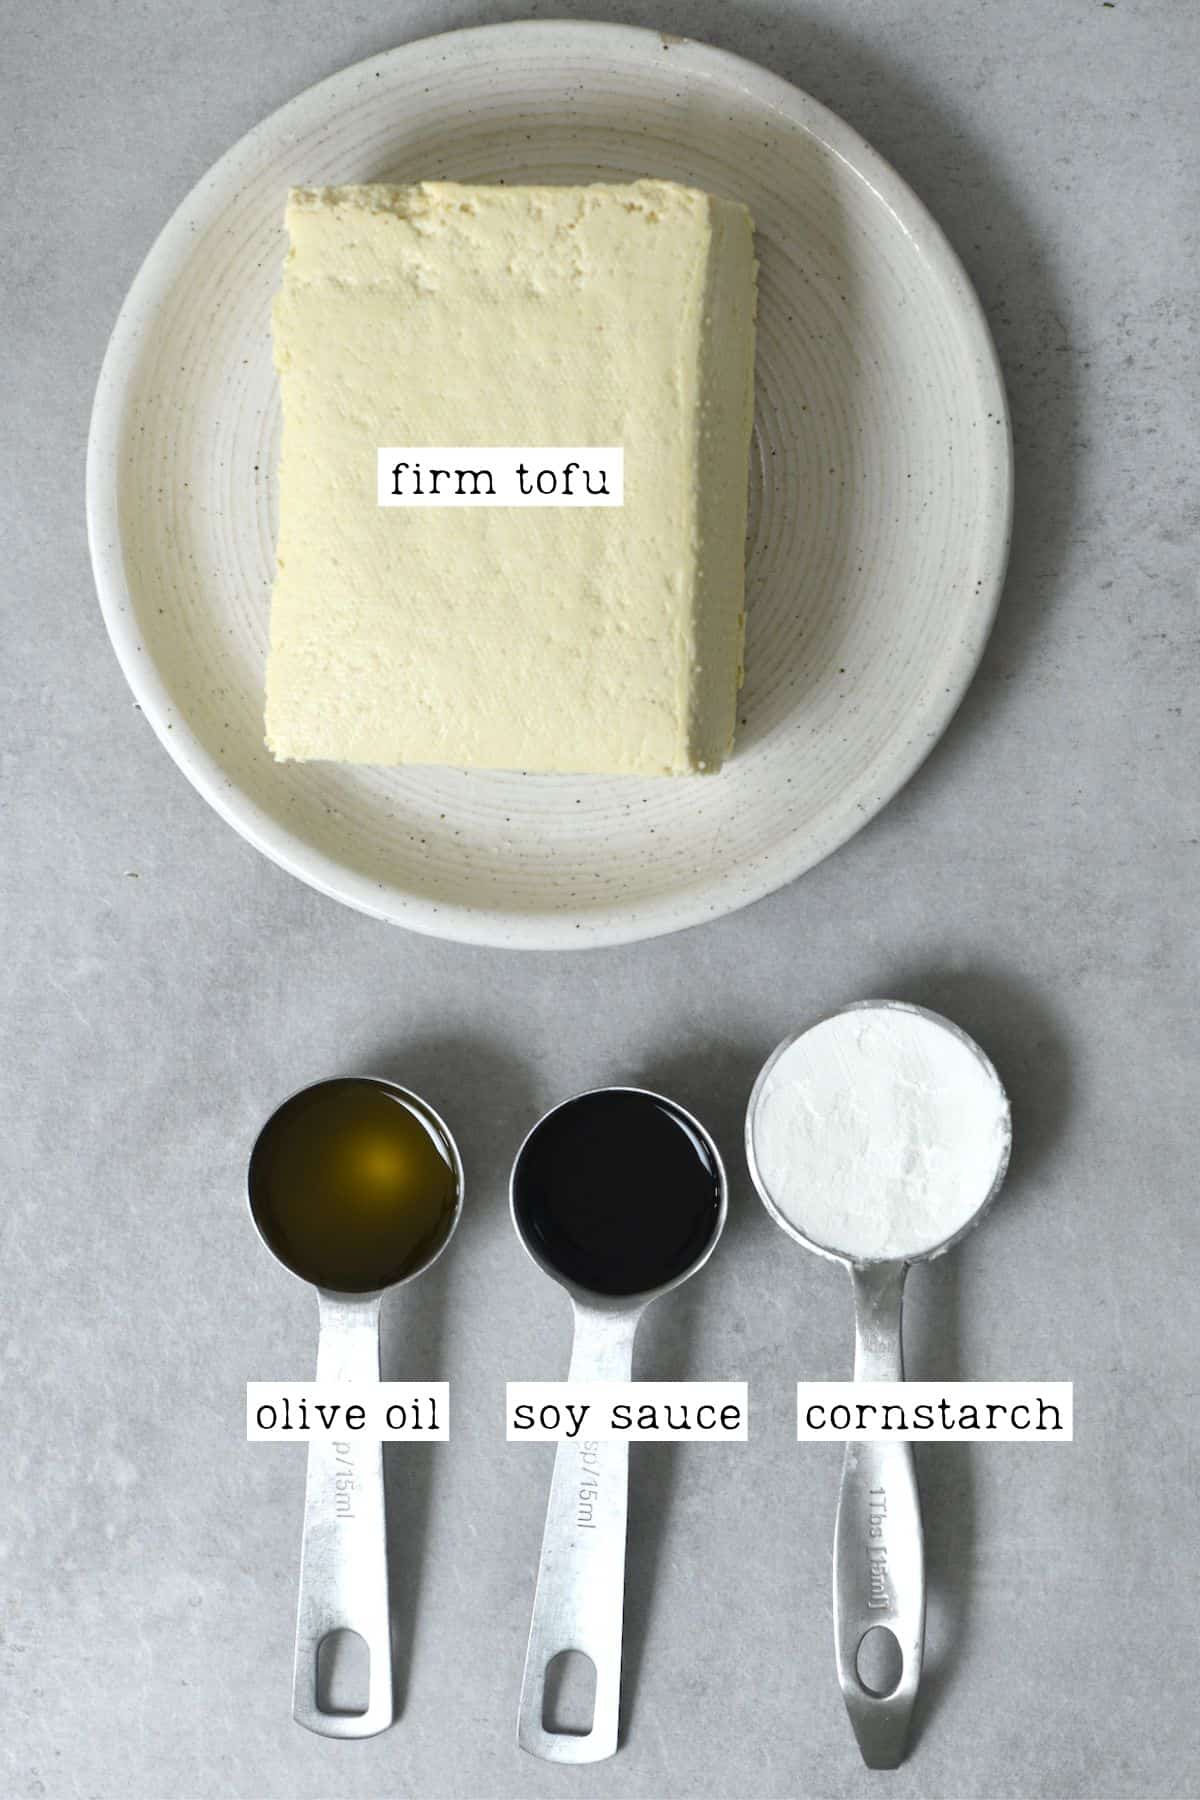 Ingredients for crispy tofu